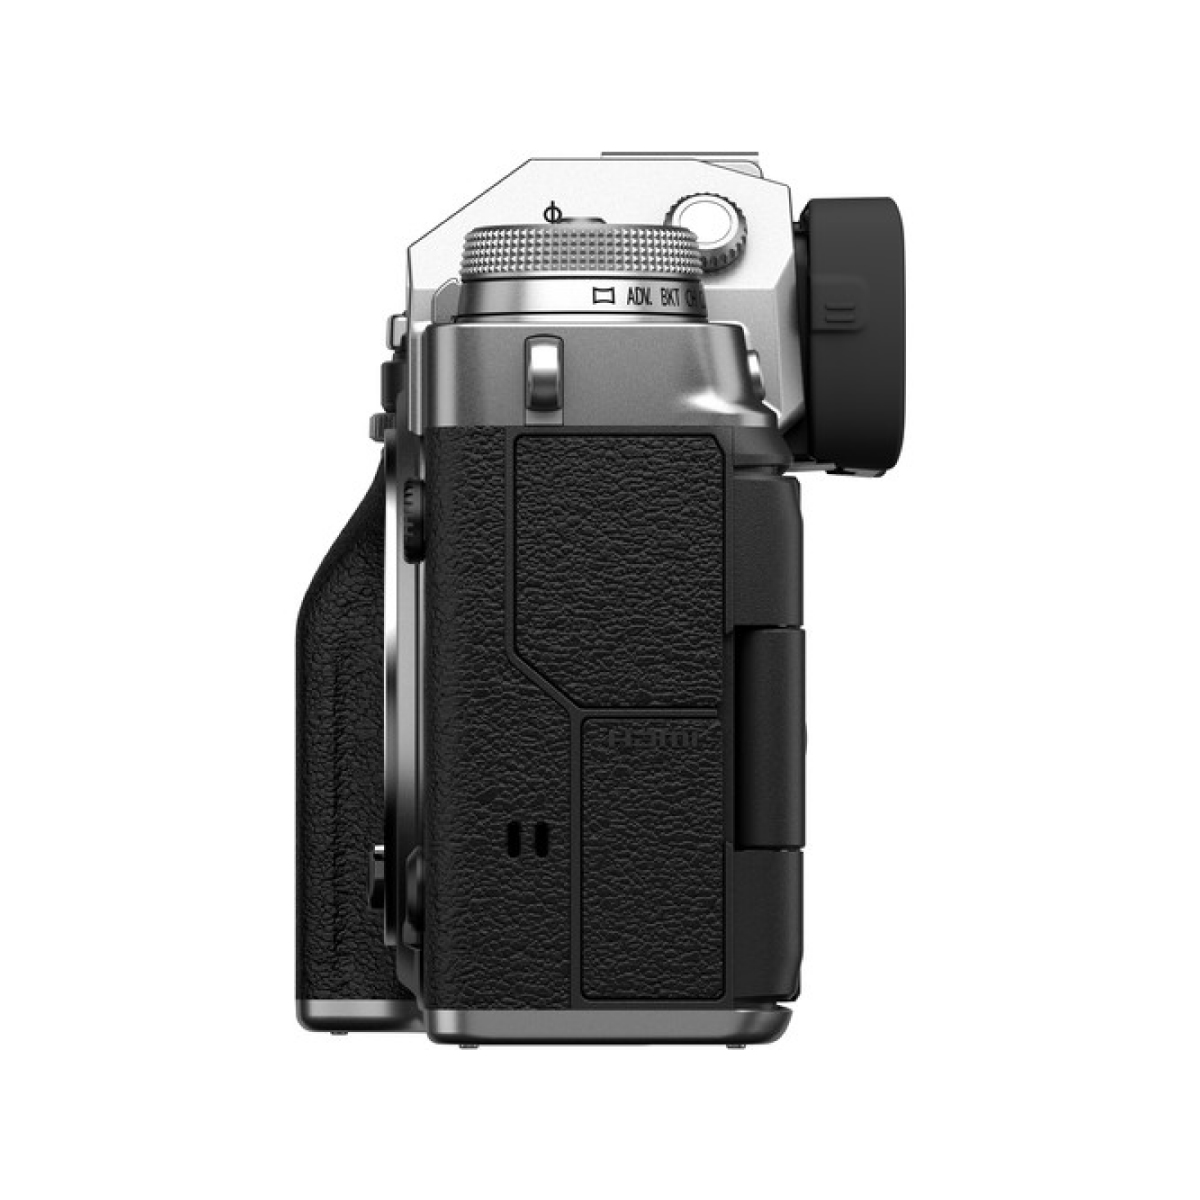 Fujifilm X-T4 26MP Mirrorless Camera Body with XF18-55mm Lens – Silver (6)